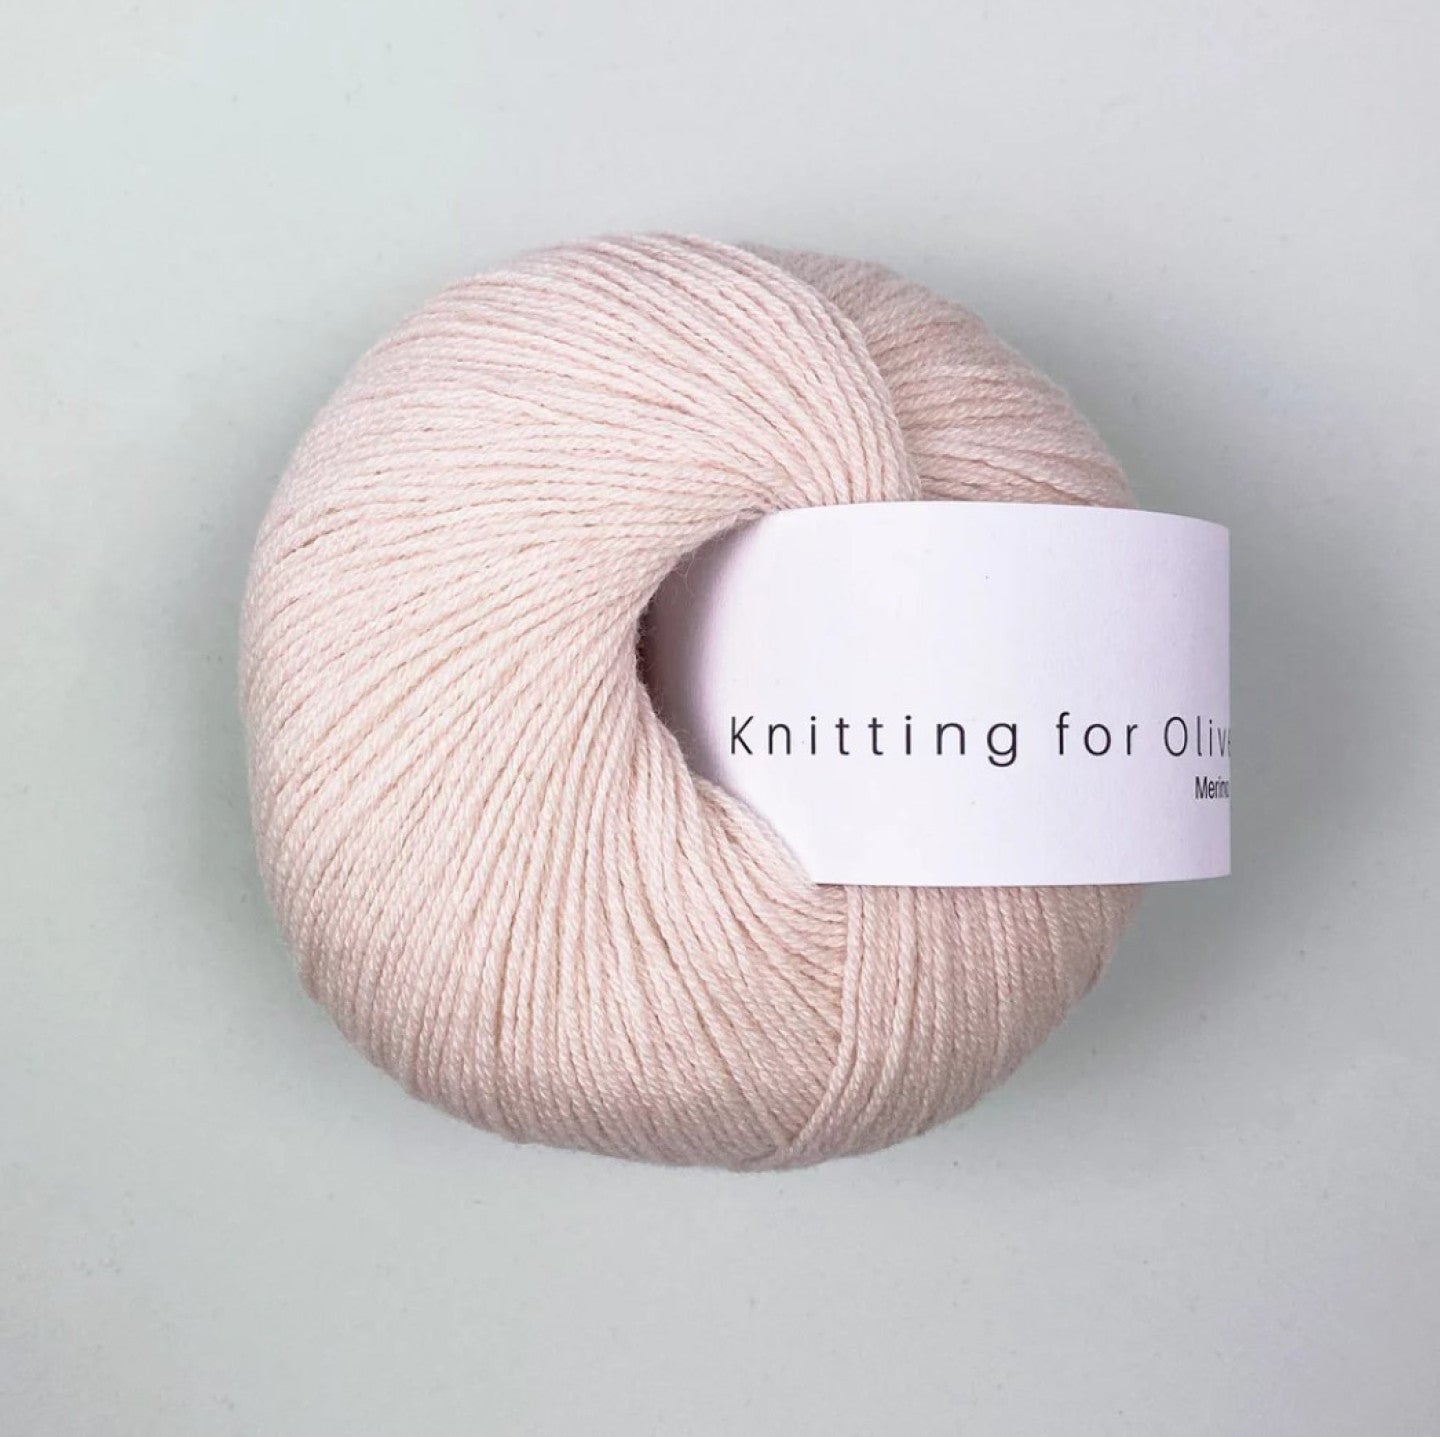 Kuvassa on Knitting for Olive Merino -lanka värissä Cherry Blossom.